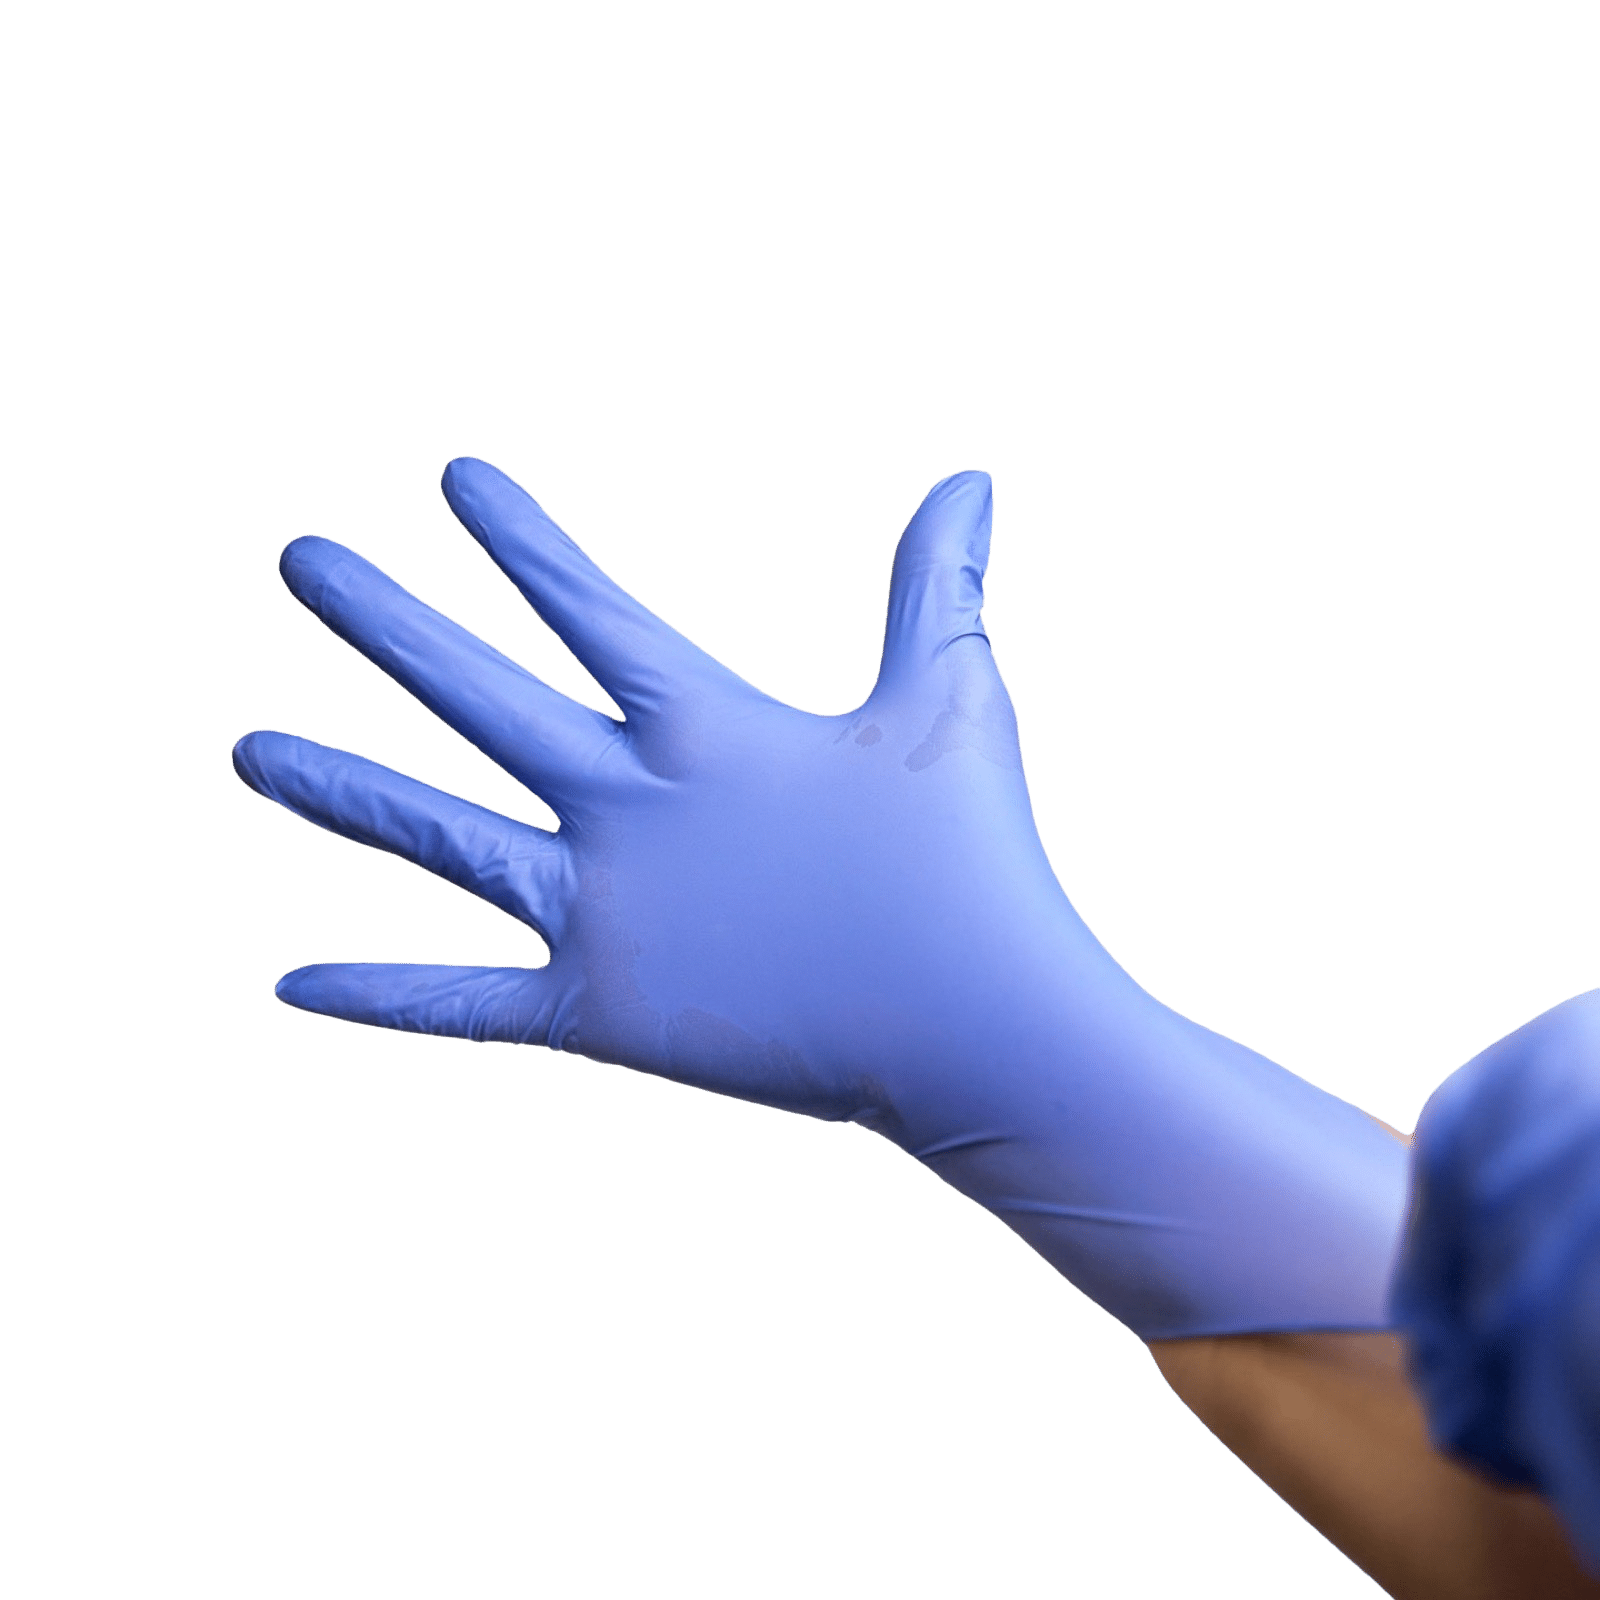 nitrile gloves stretch test